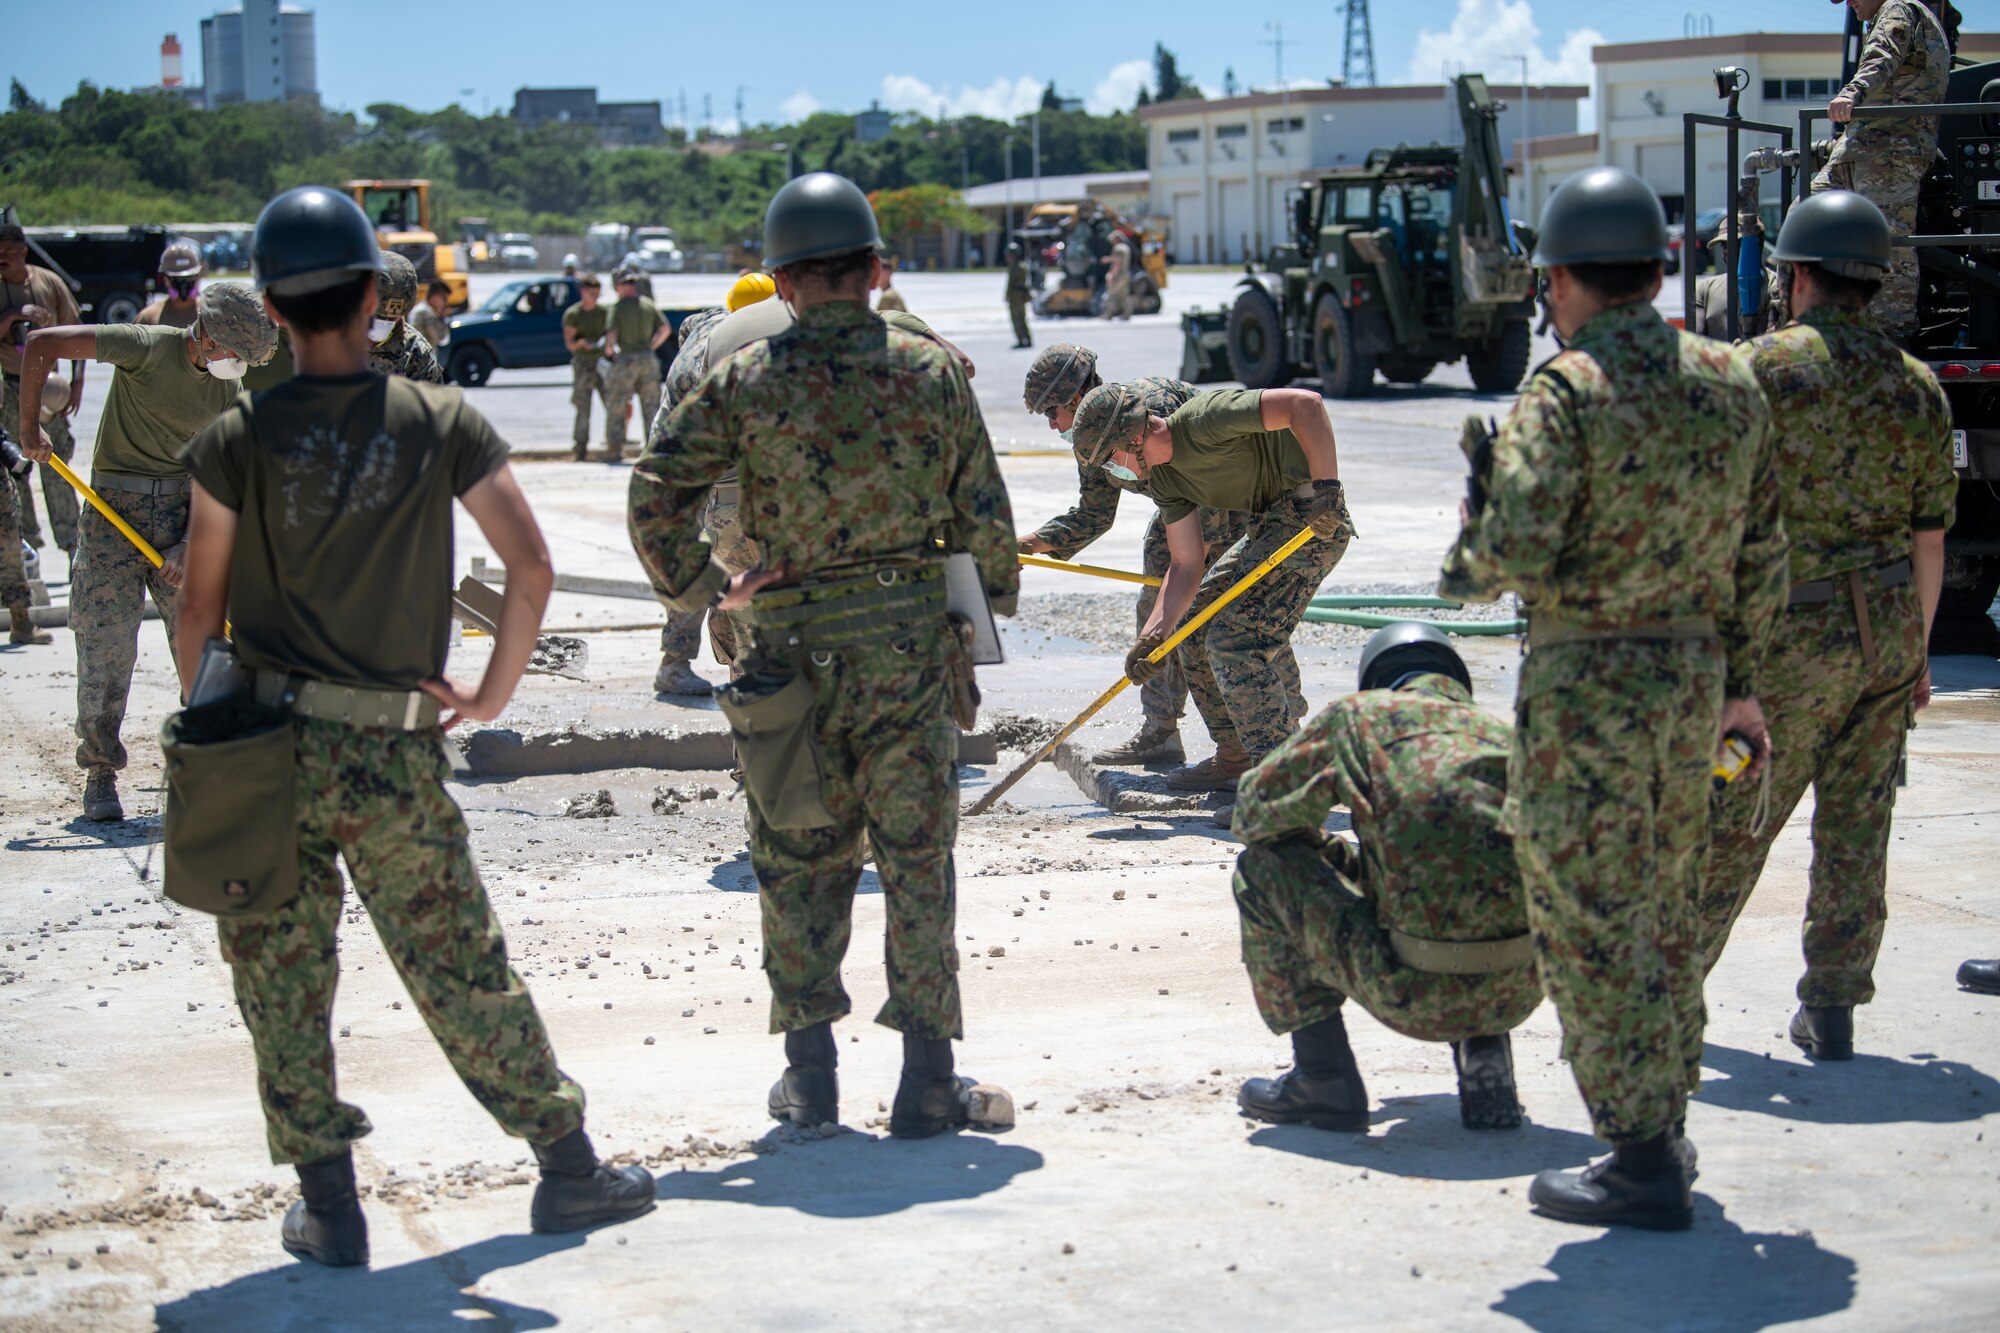 Ishigaki Security Forces spectating as U.S. Forces conduct RADR exercise